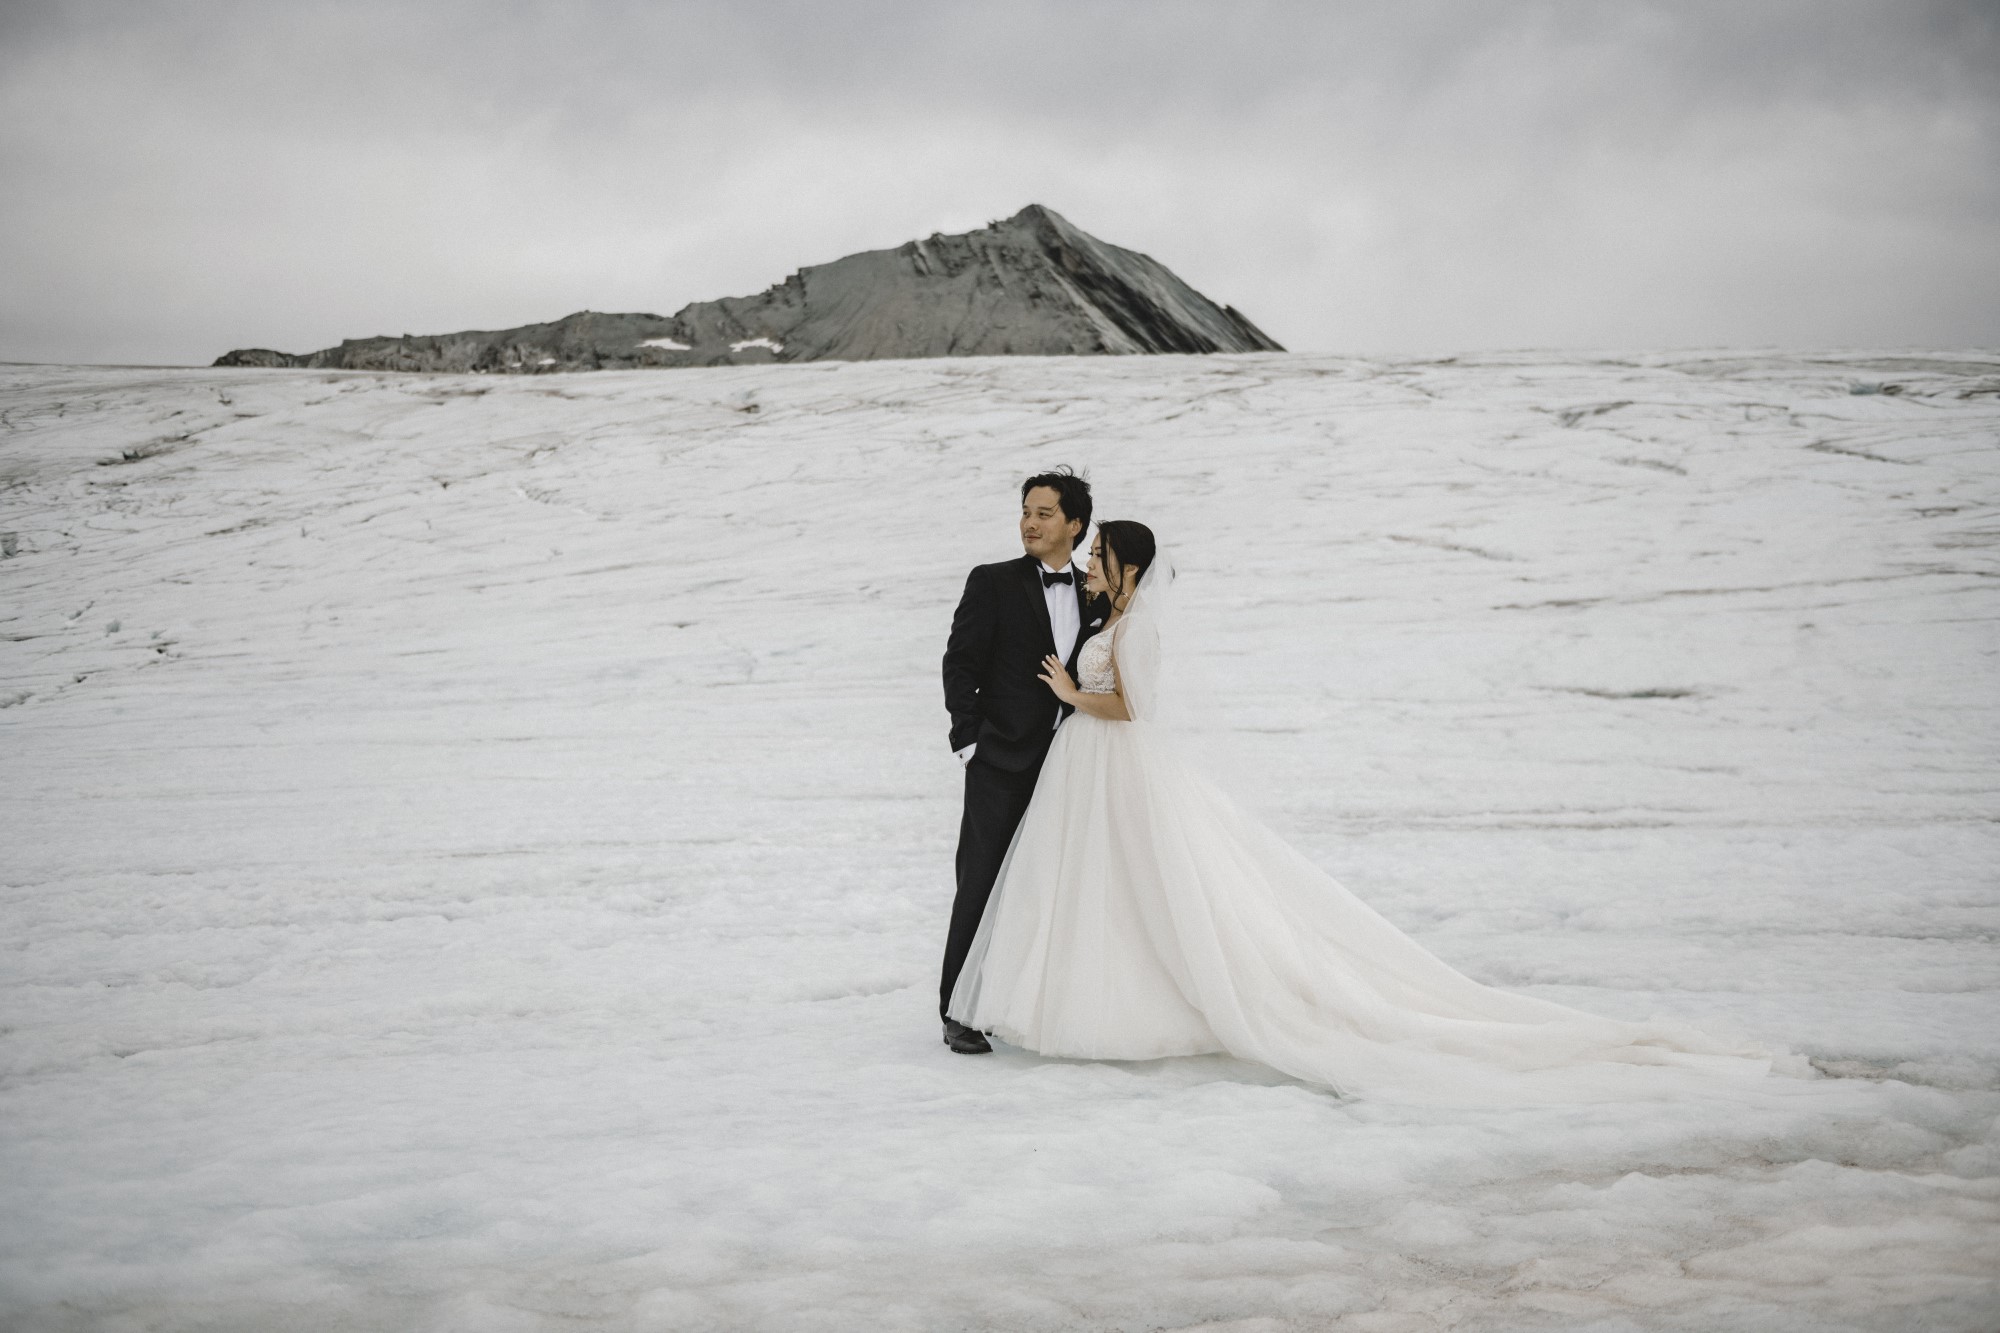 Brautpaar posiert in Schneelandschaft.